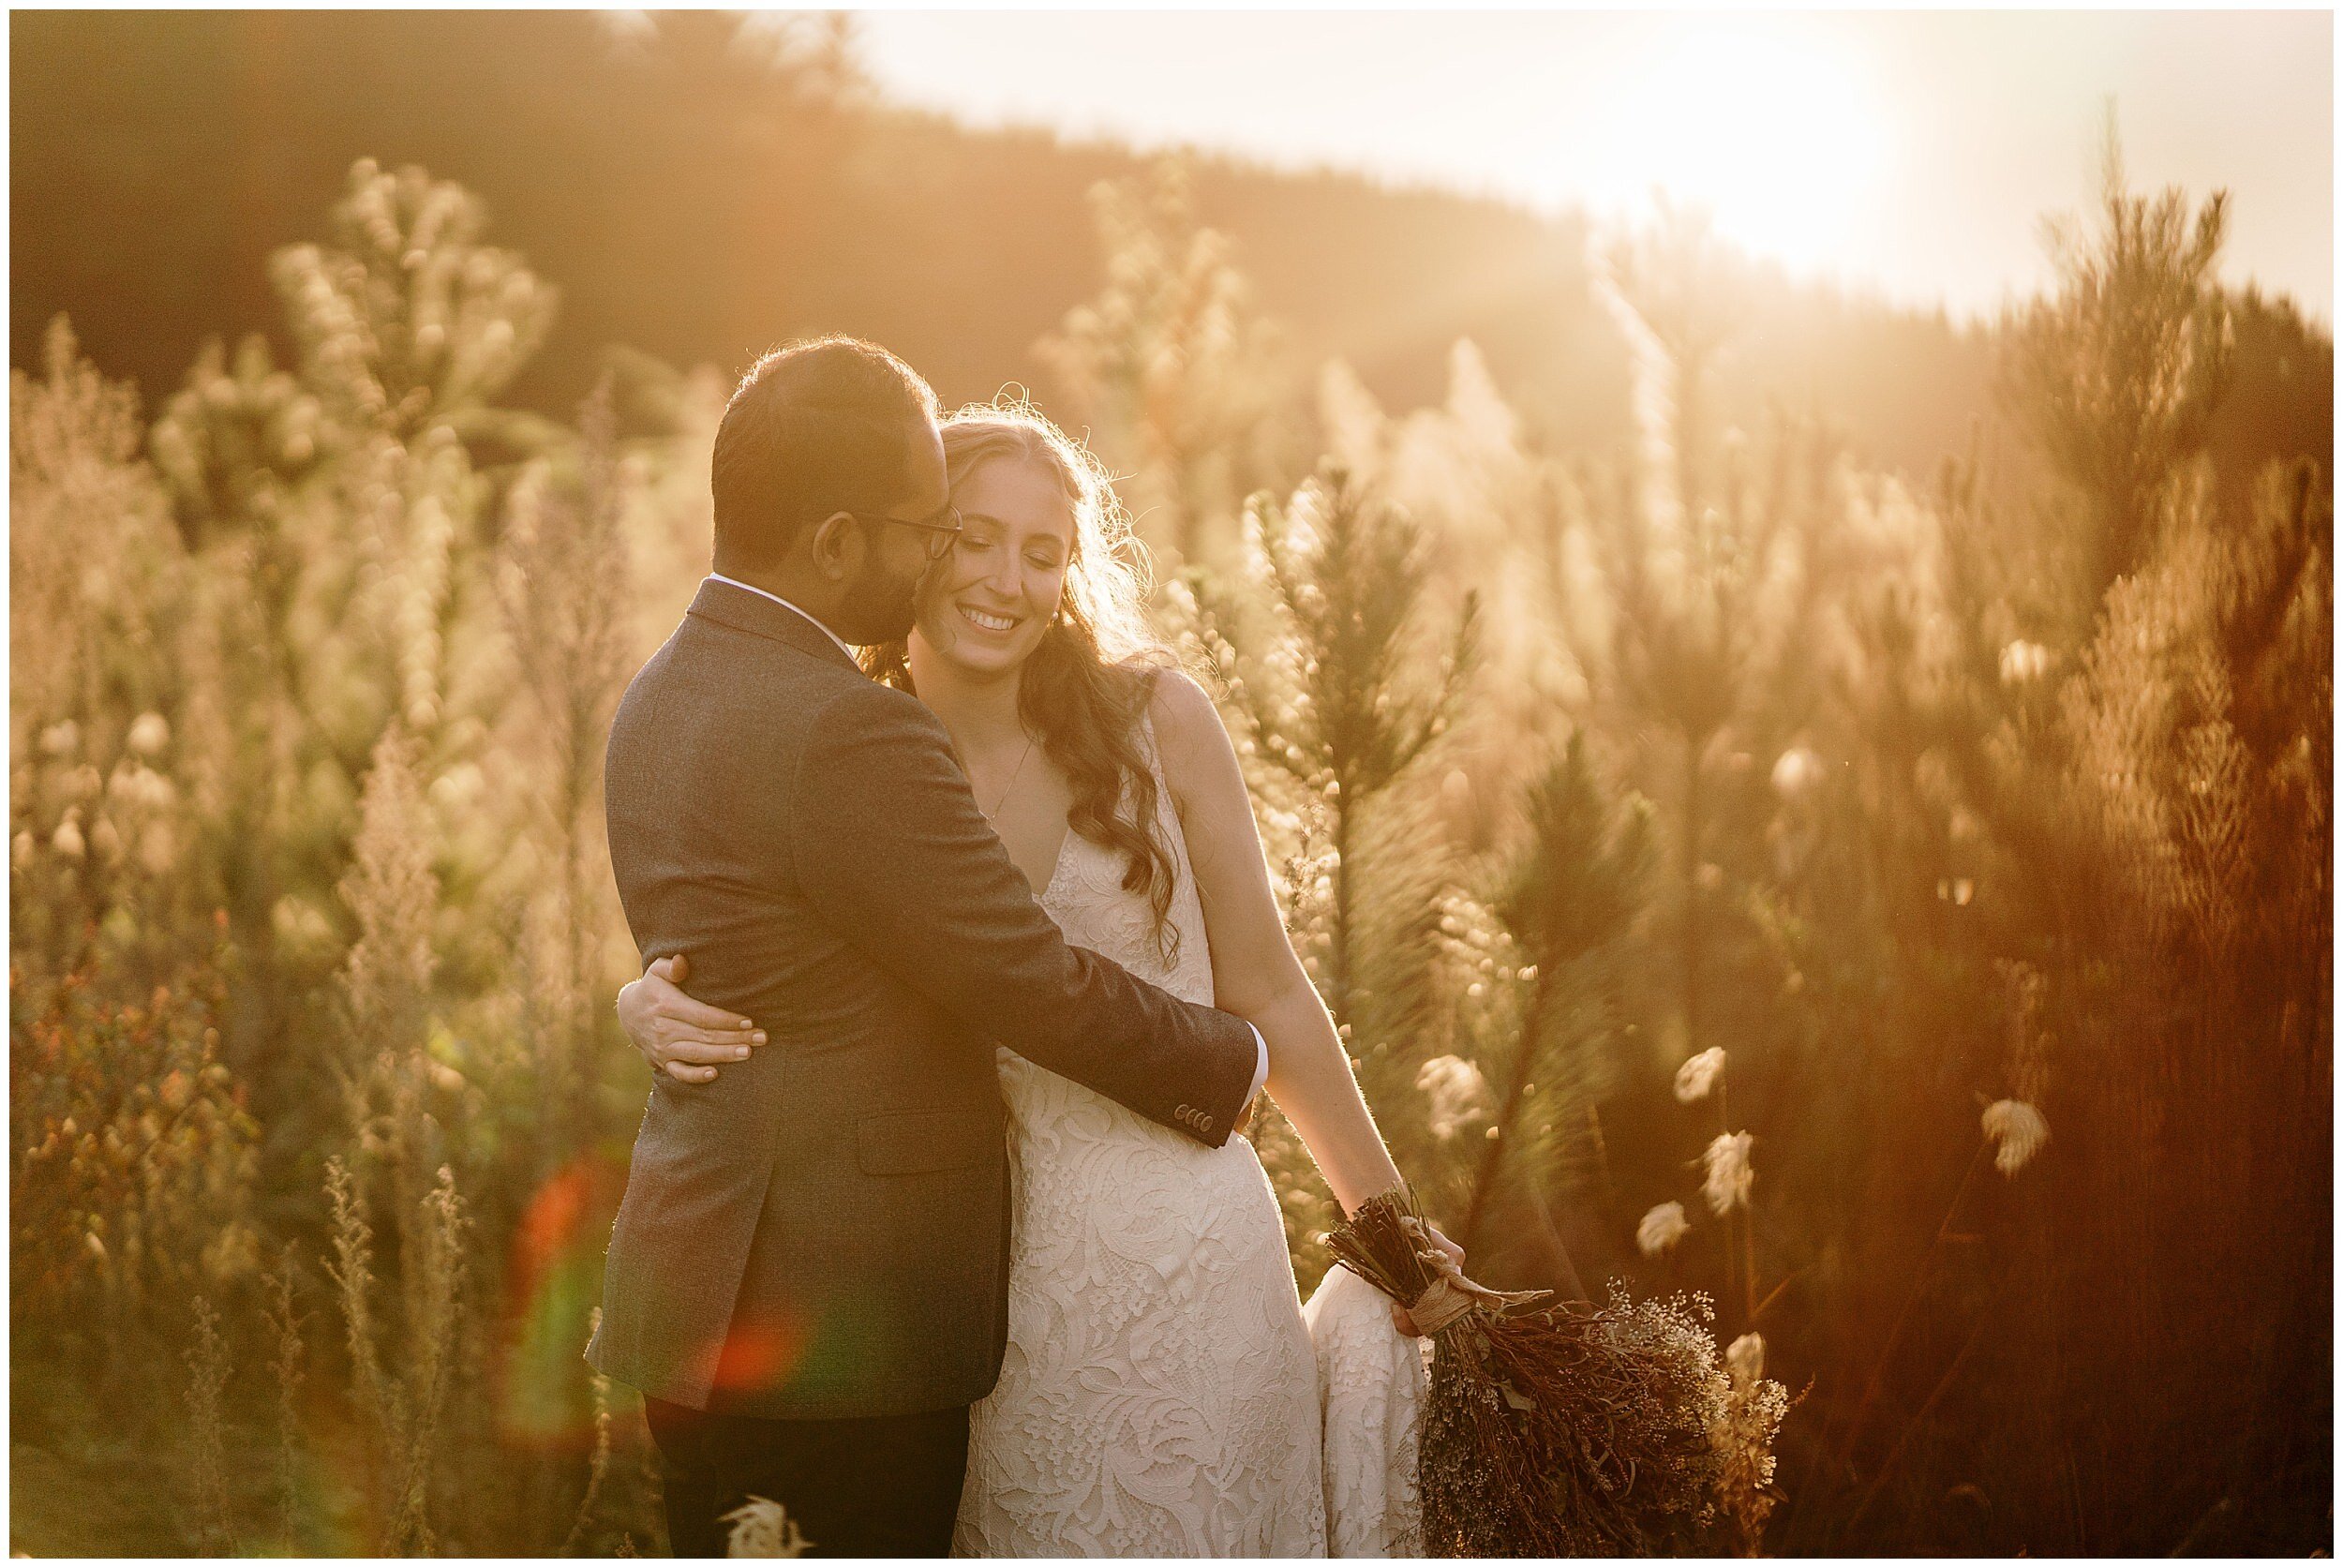 Old Forest School Wedding Venue | Auckland Wedding Photographer | Auckland Videographer | Forest Wedding | Intimate Rustic Wedding | Tauranga Venue